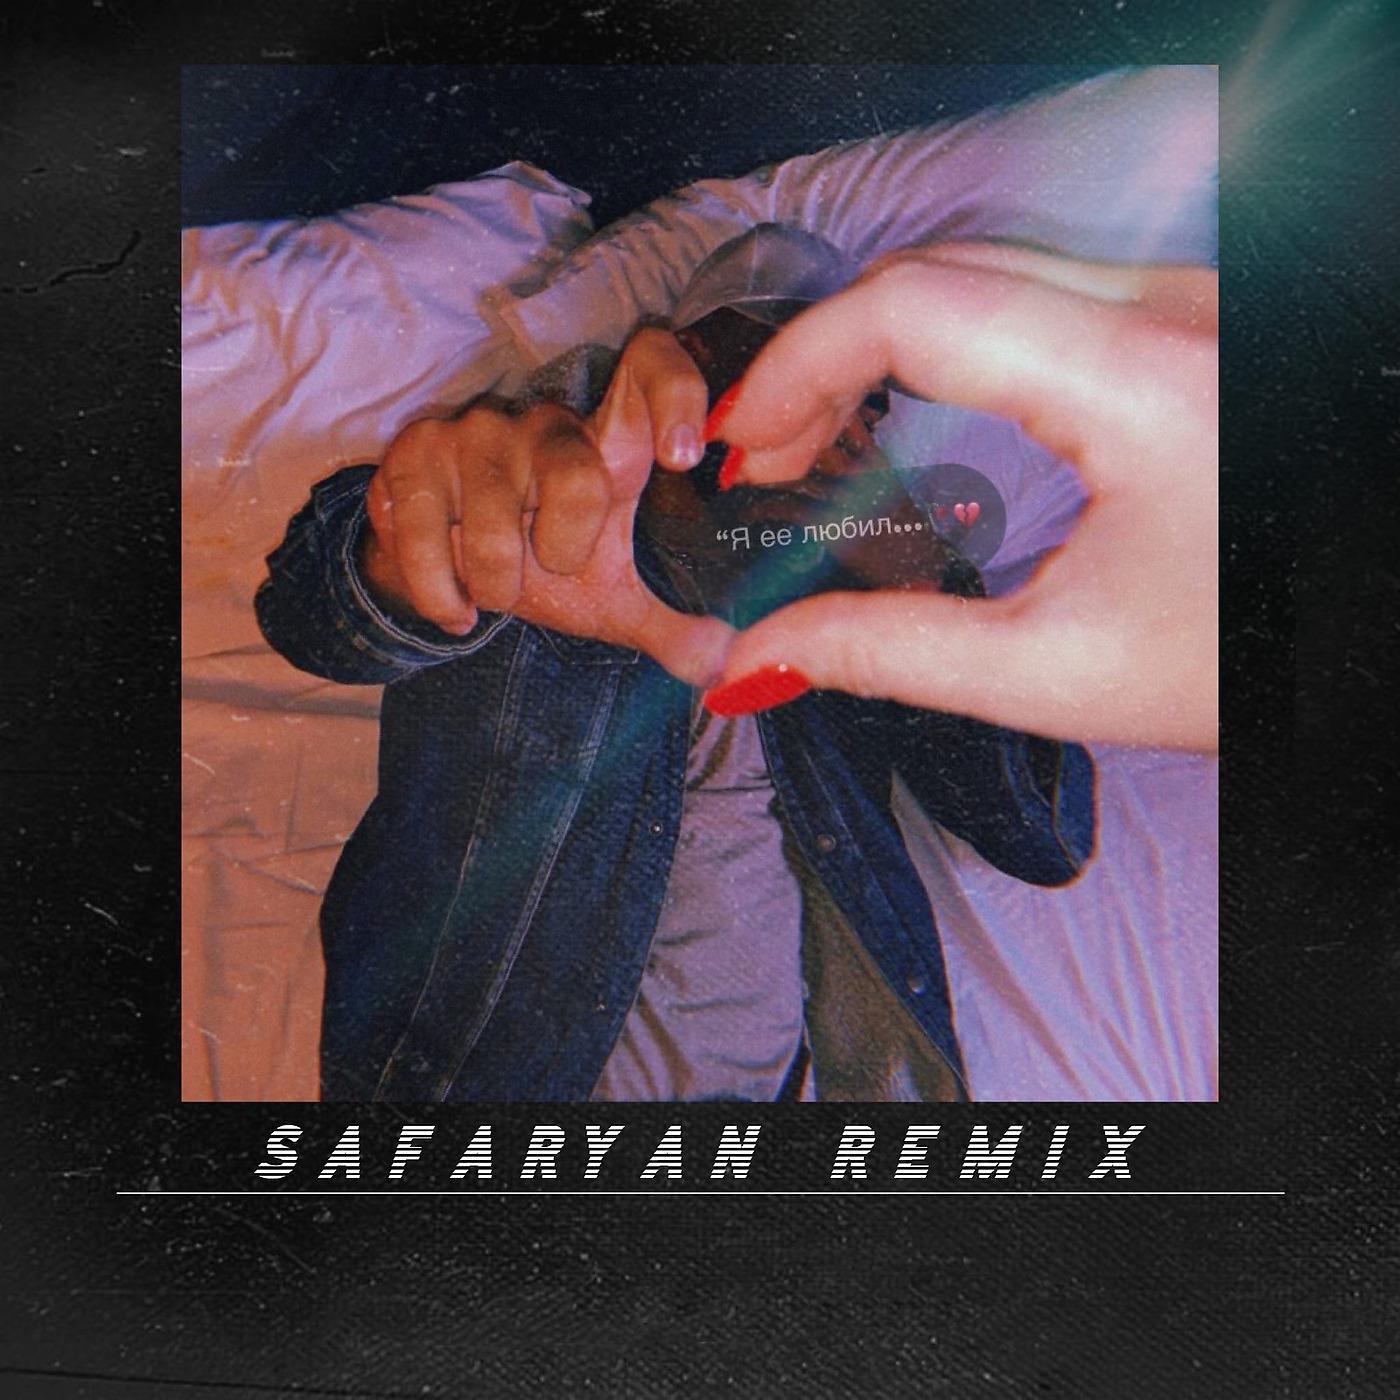 Safaryan Beats. (Safaryan Remix). Я её любил Vitali. Джанага альбом.